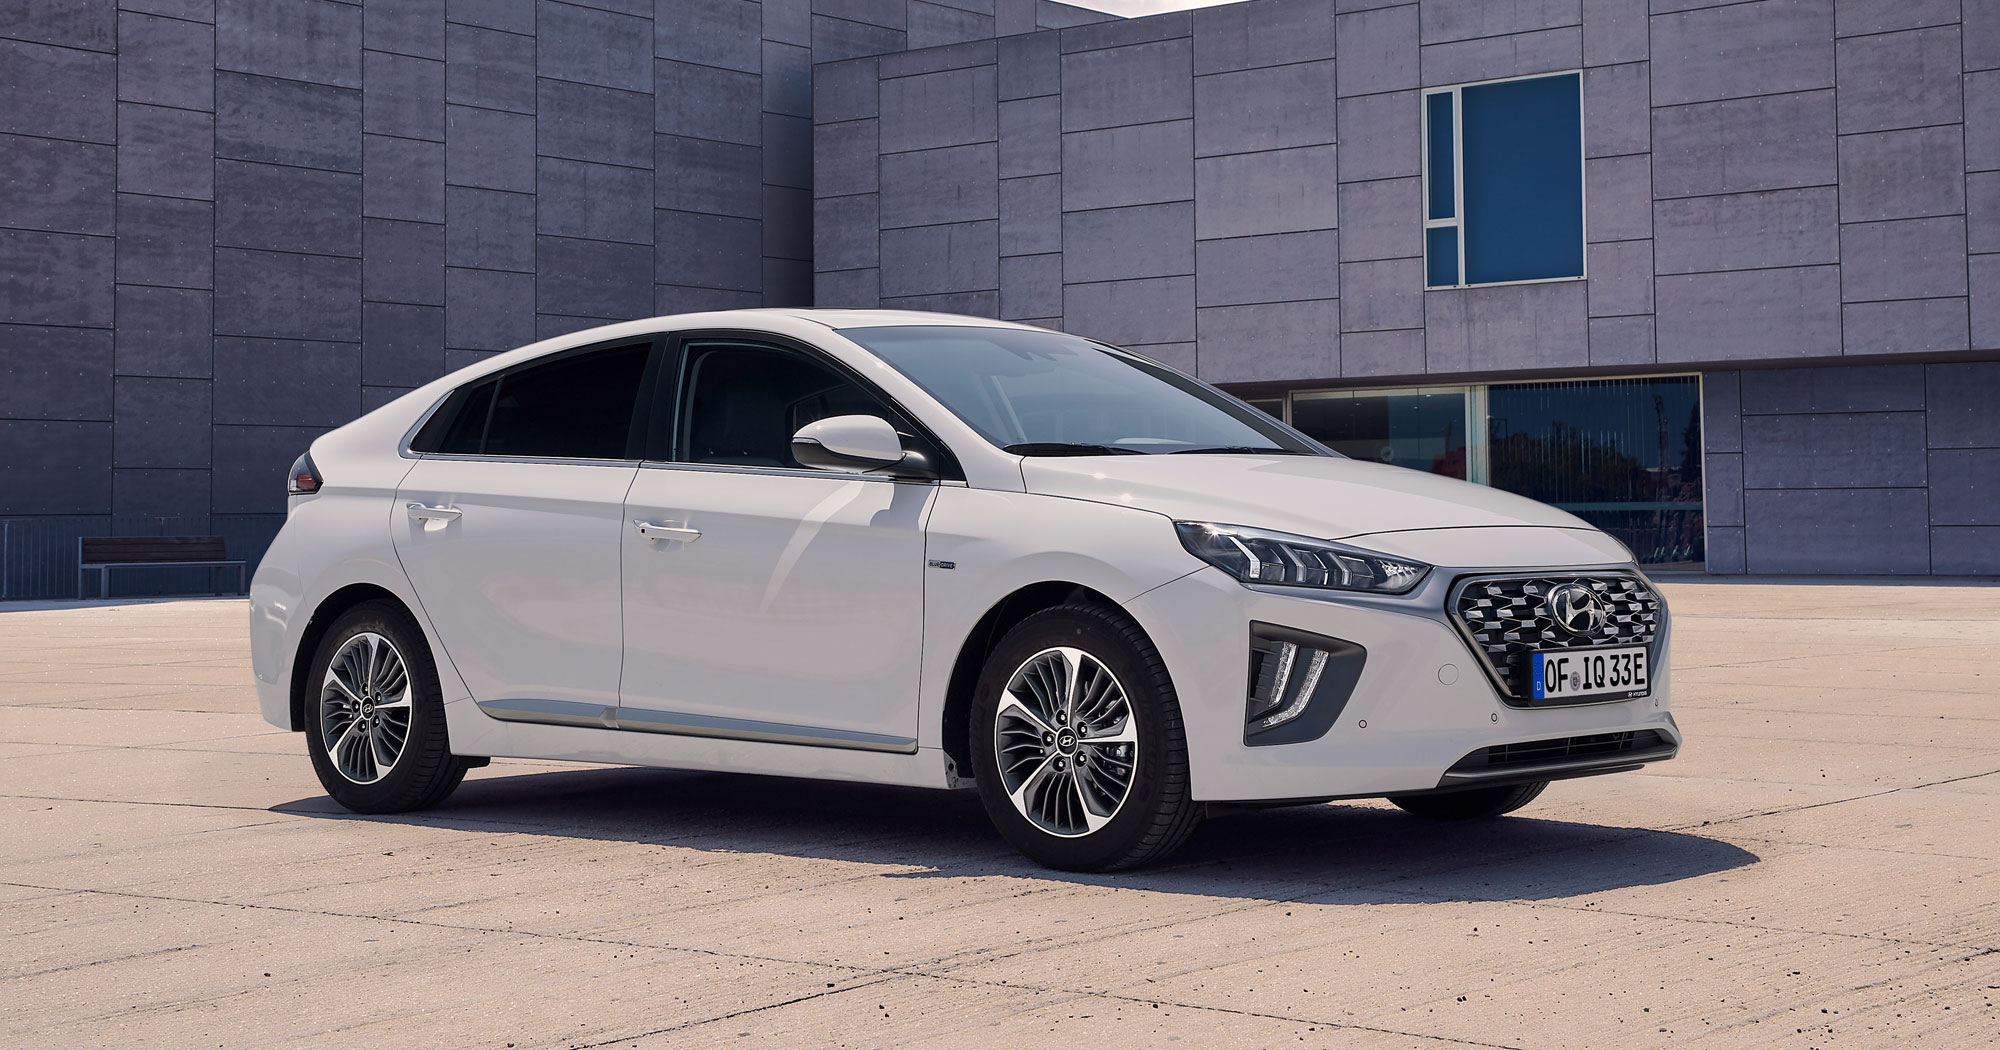 Uppdaterade Hyundai Ioniq – med svenska priser